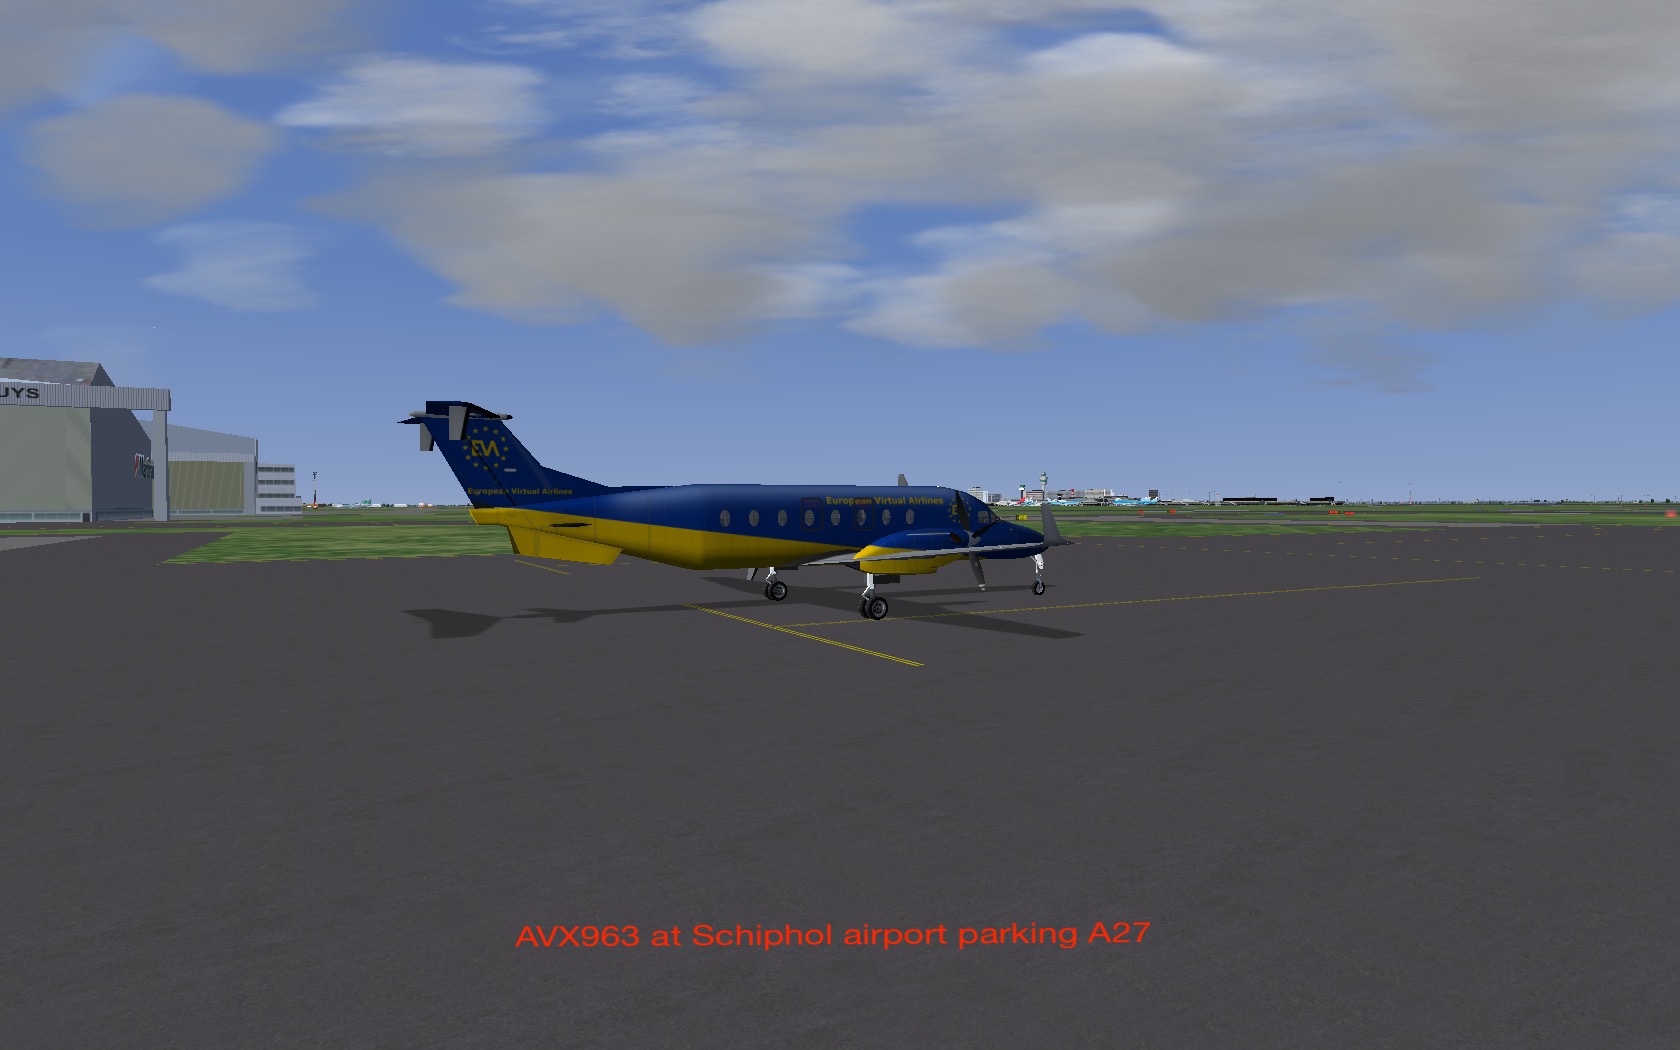 D-AVX190 at Schiphol (EHAM) parking A27.
Flighnumber: AVX9190 from EHAM to EDDF
Aircraft: Raytheon Beechcraft 1900d (EVA painting)
Time: 9:25 UTC.